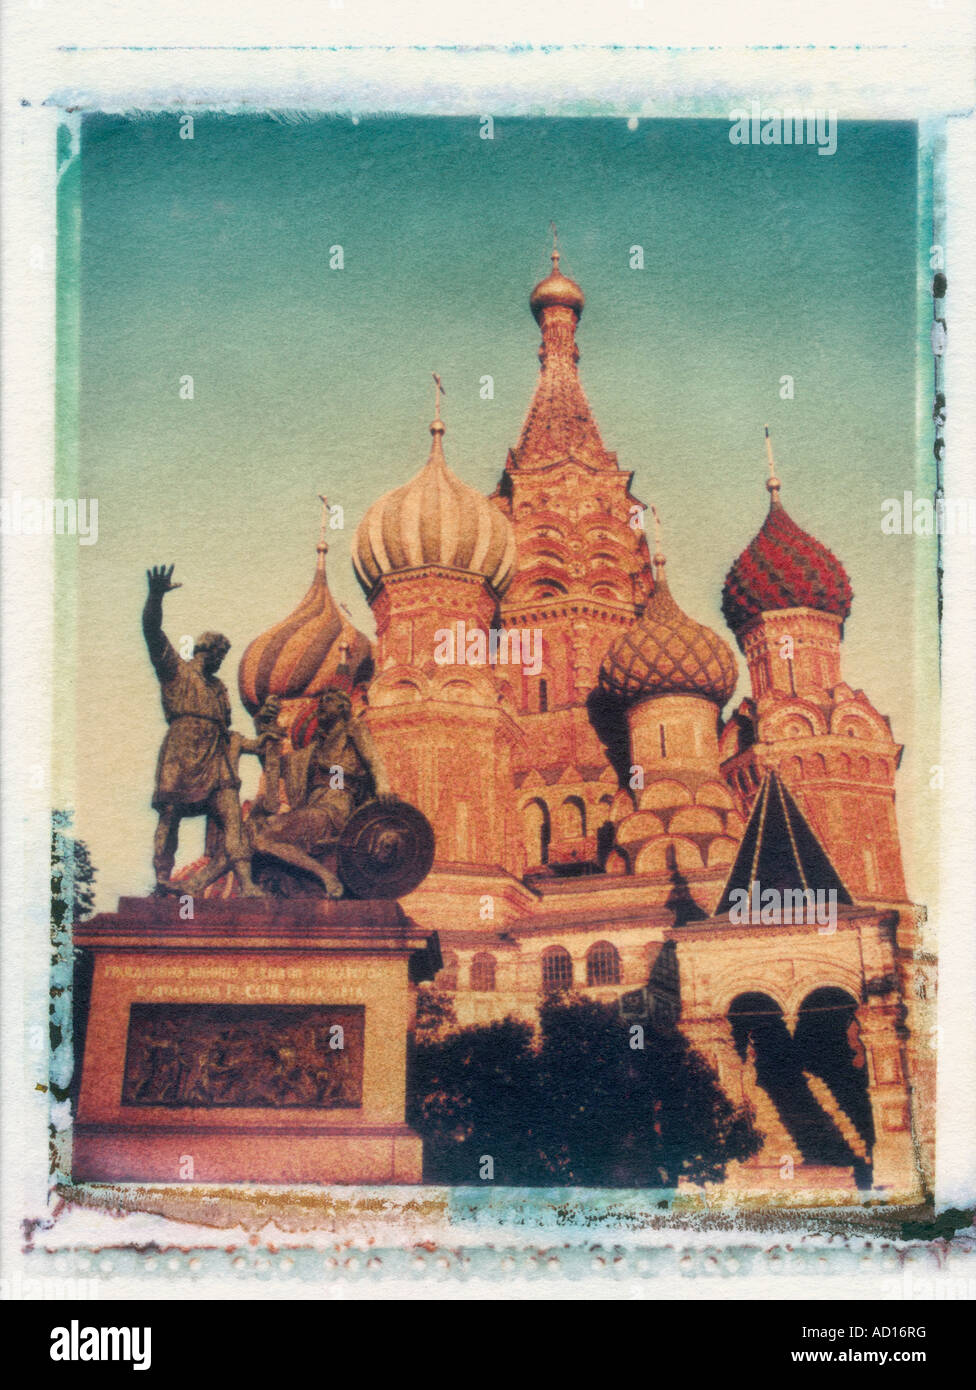 Basilius Kathedrale, Roter Platz, Moskau, Russland Stockfoto